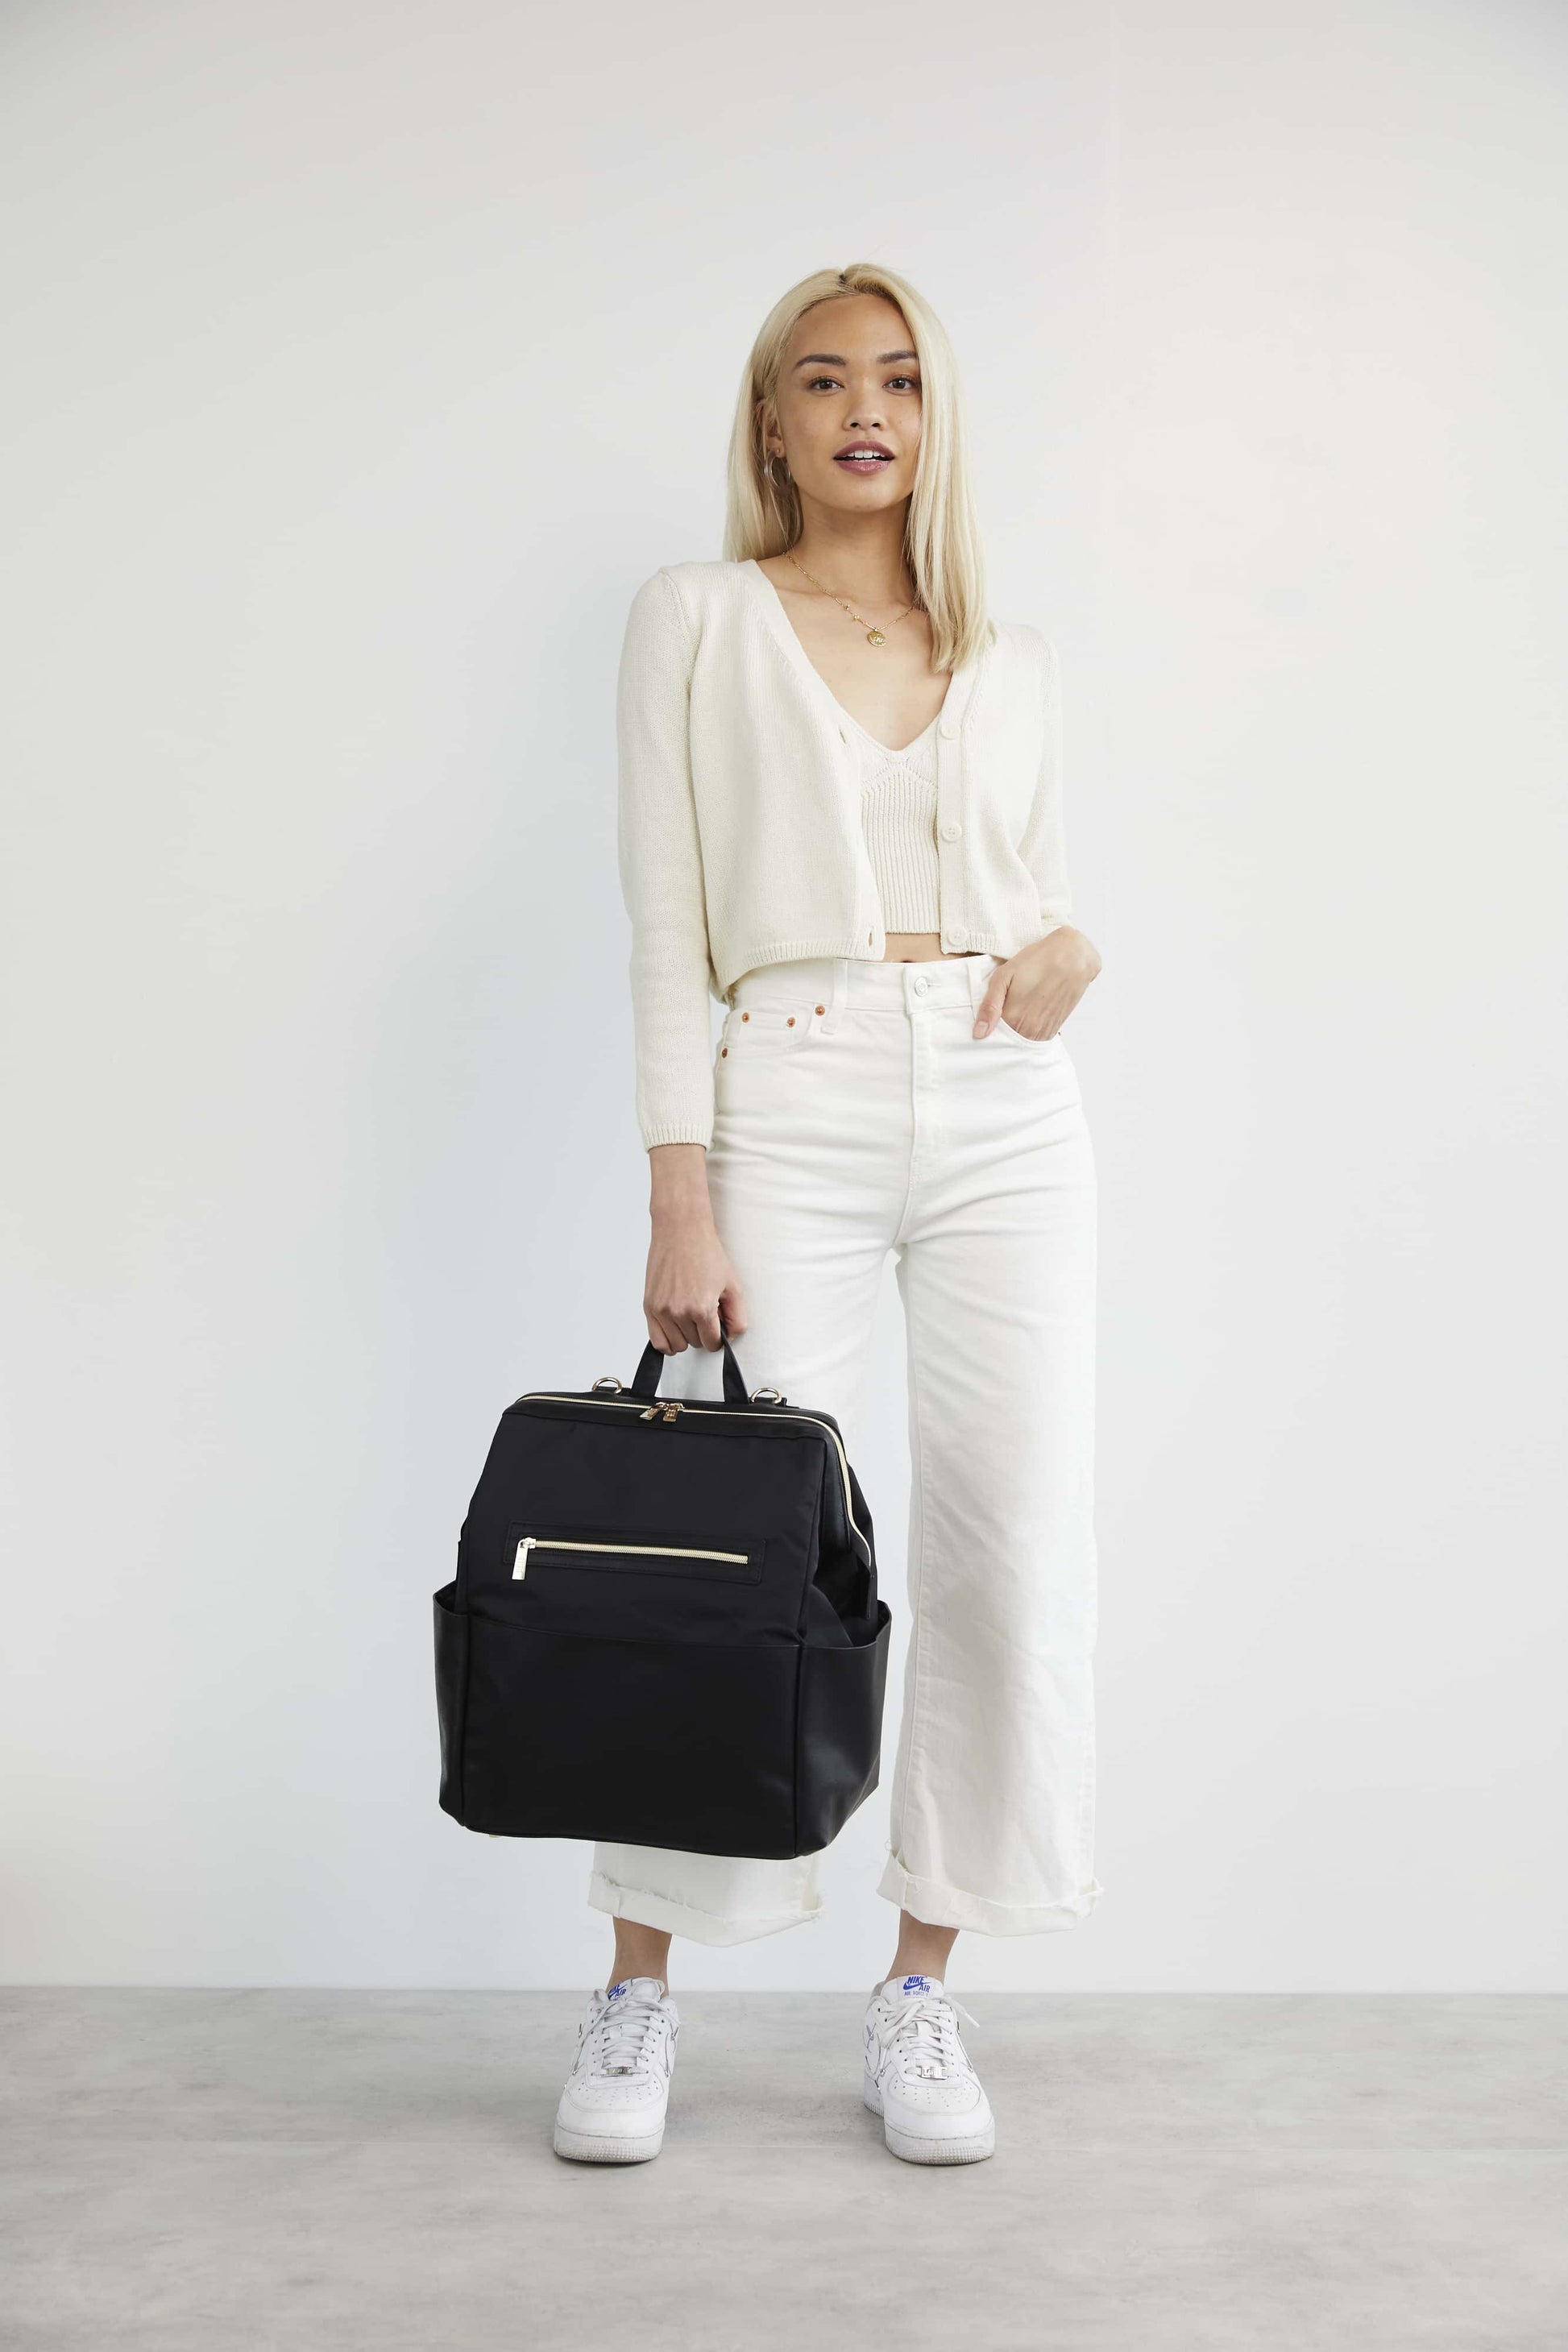 Model in white clothing holding the Diaper Bag Backpack baby bag in black